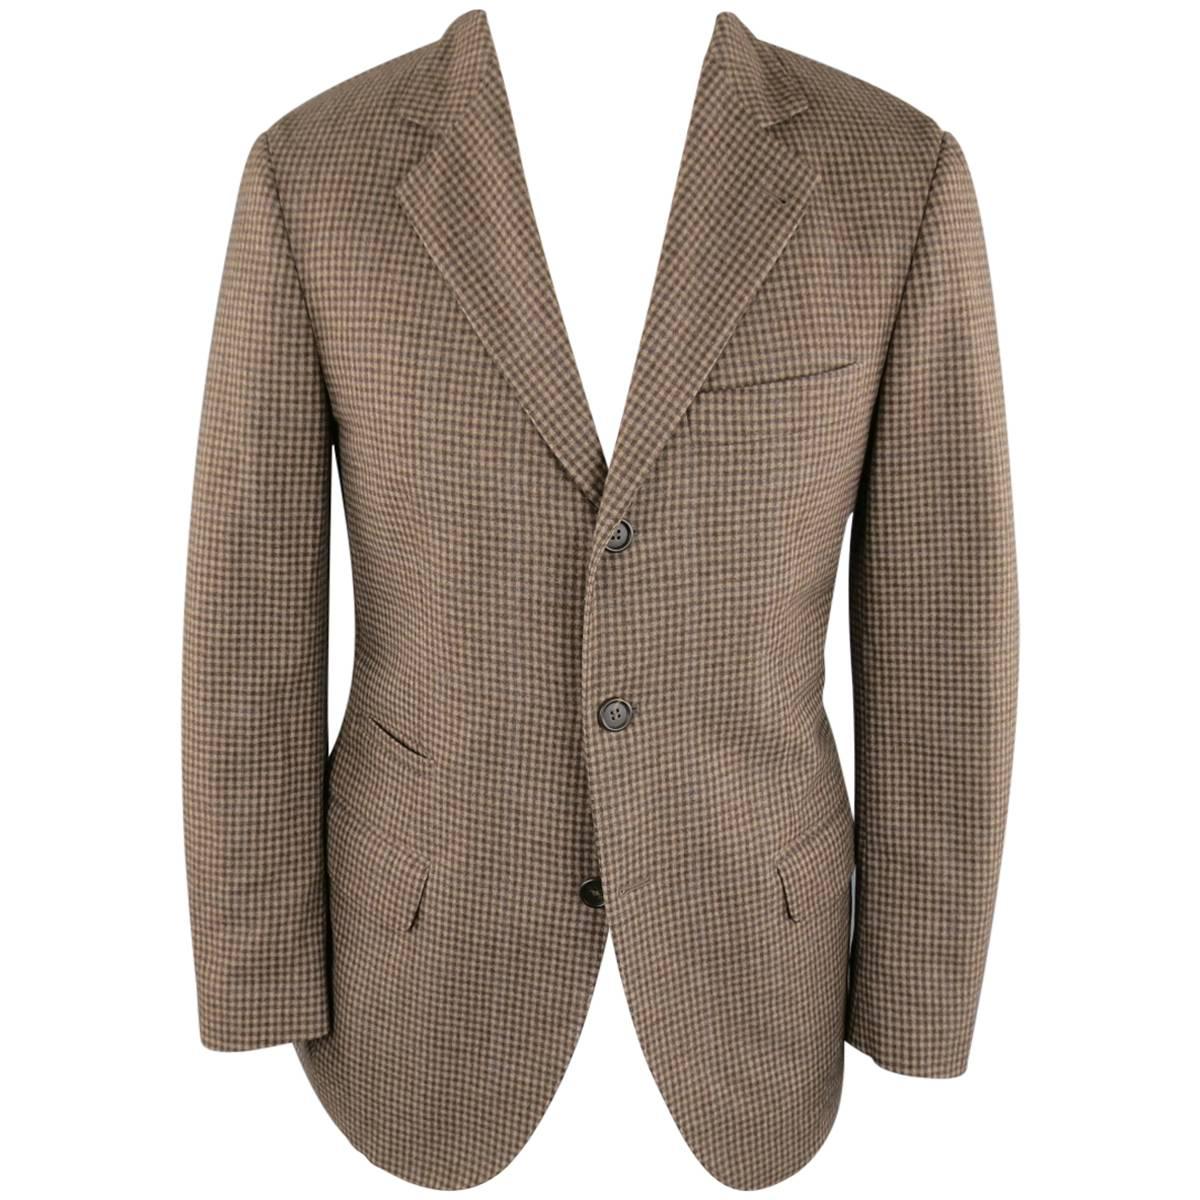 Men's BRUNELLO CUCINELLI 38 Short Tan & Brown Checkered Plaid Wool Sport Coat